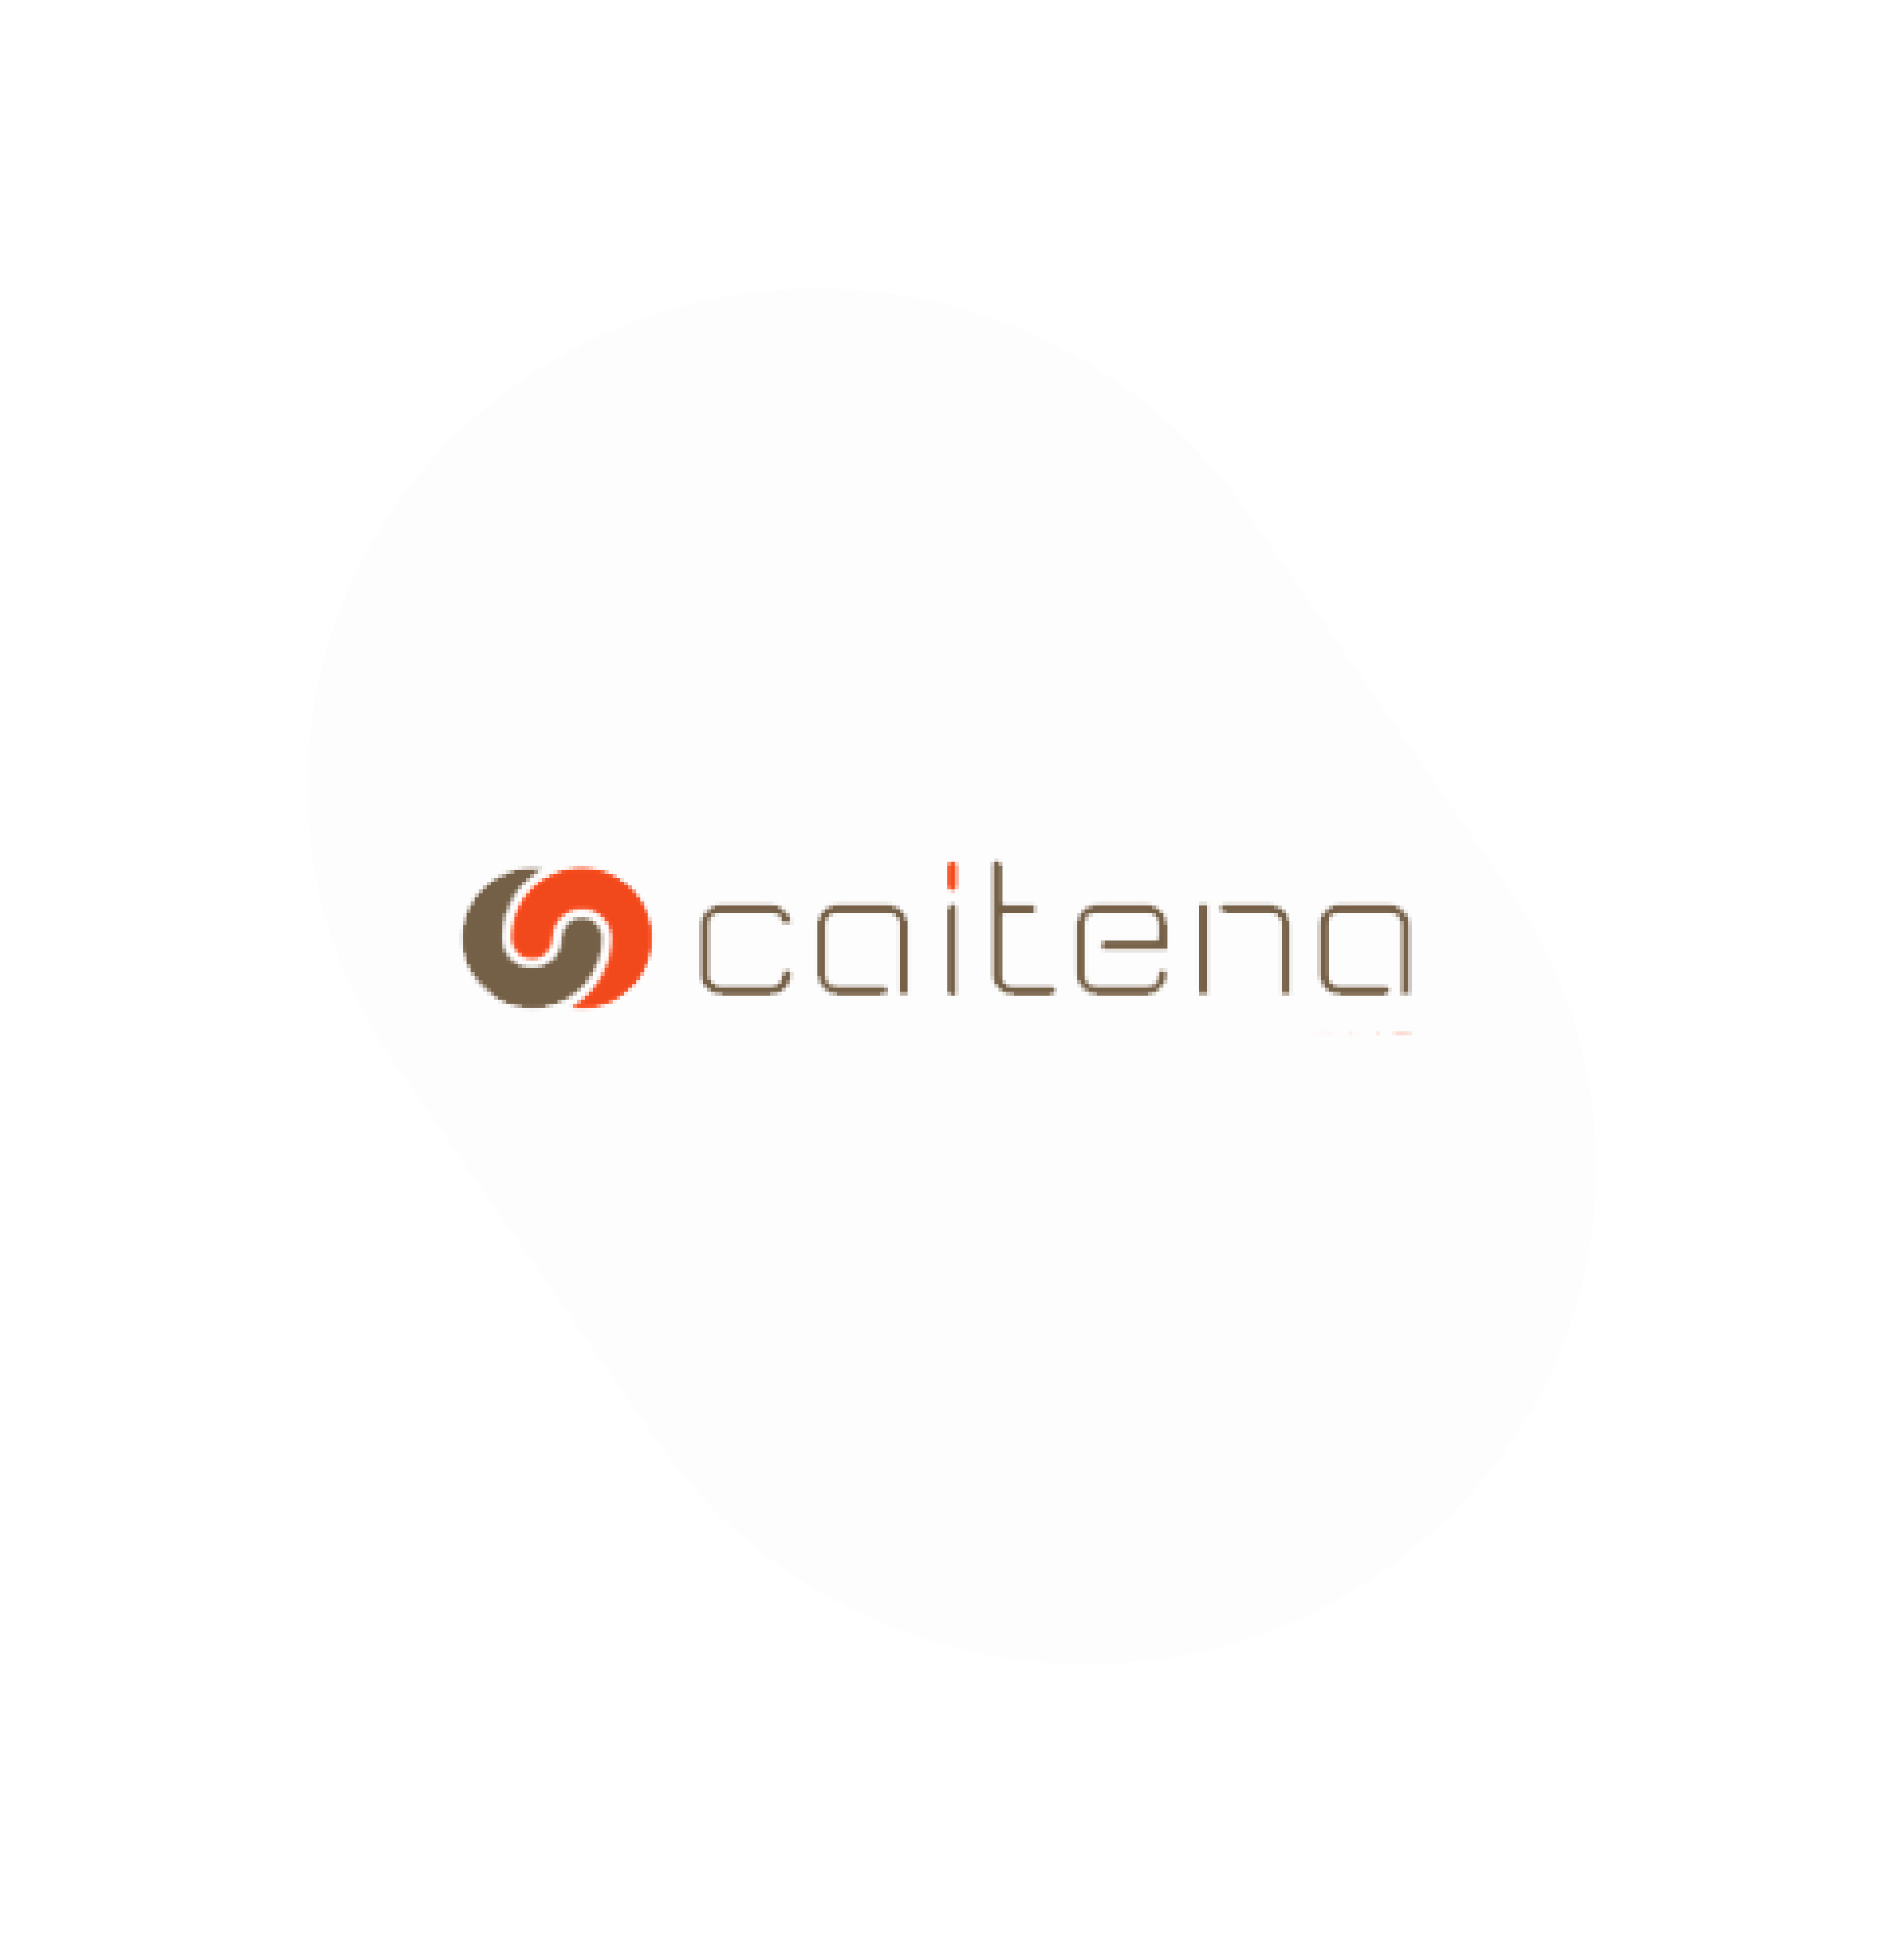  Acquisition of Caitena